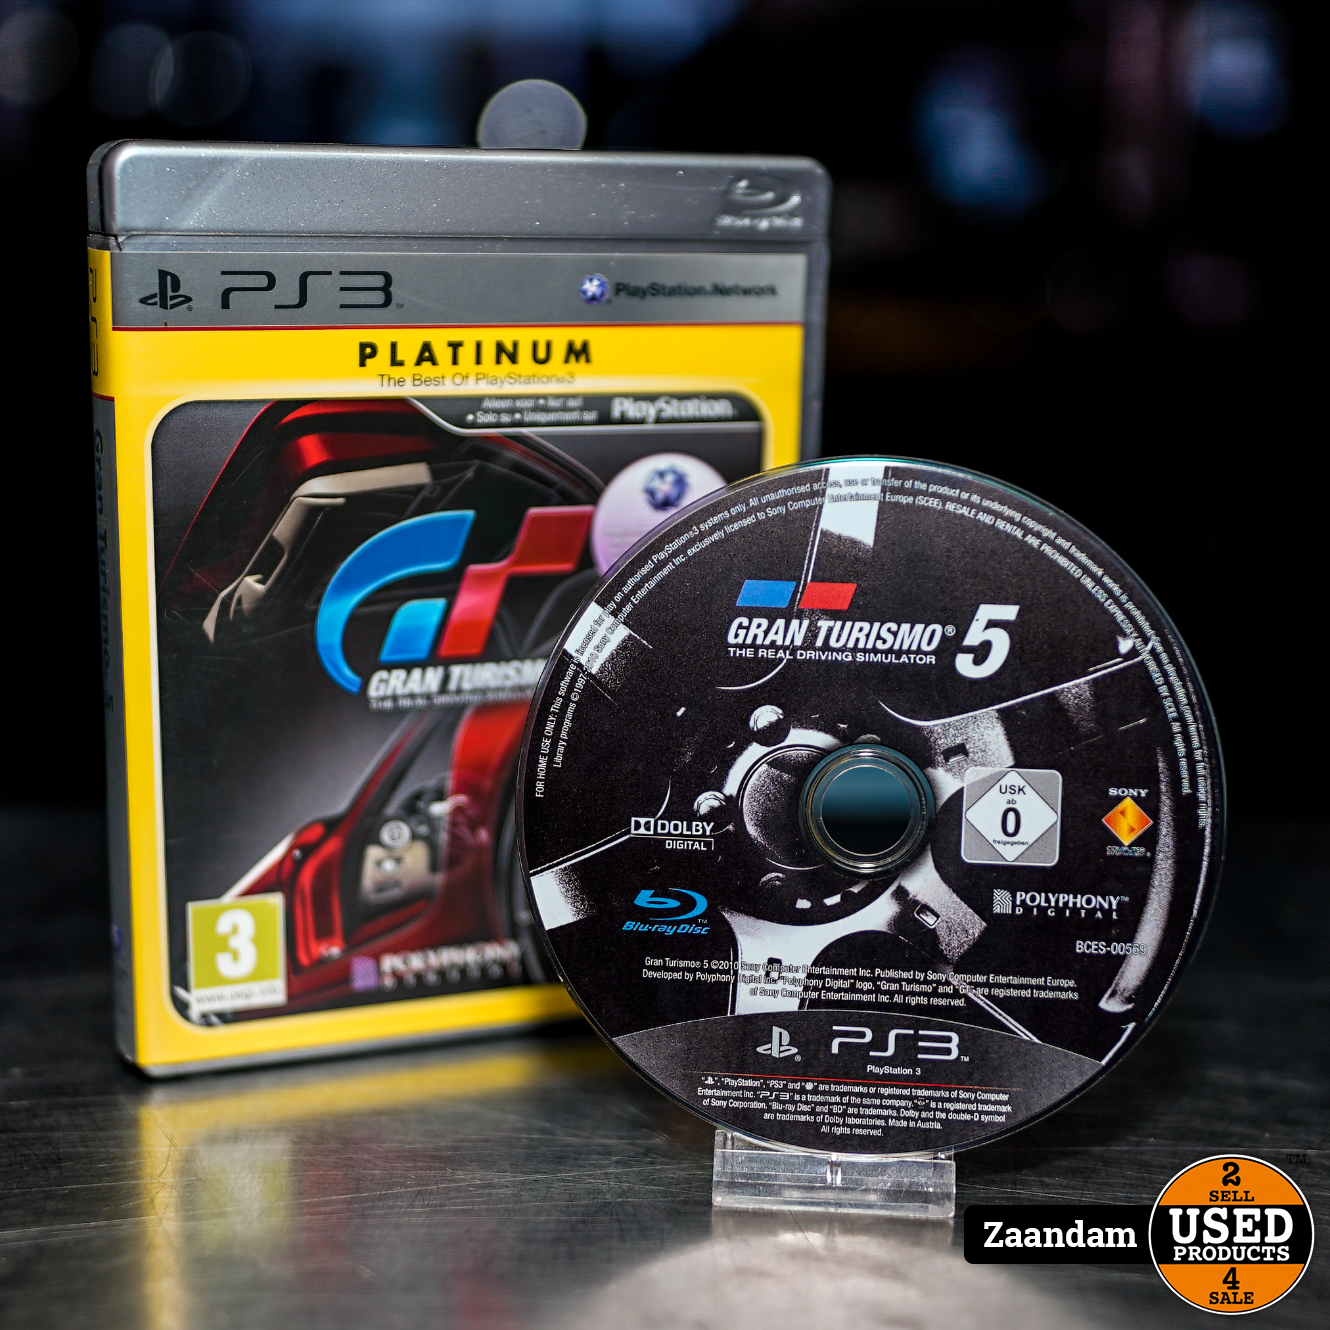 Playstation 3 Game: Turismo 5 Platinum (PS3) - Zaandam